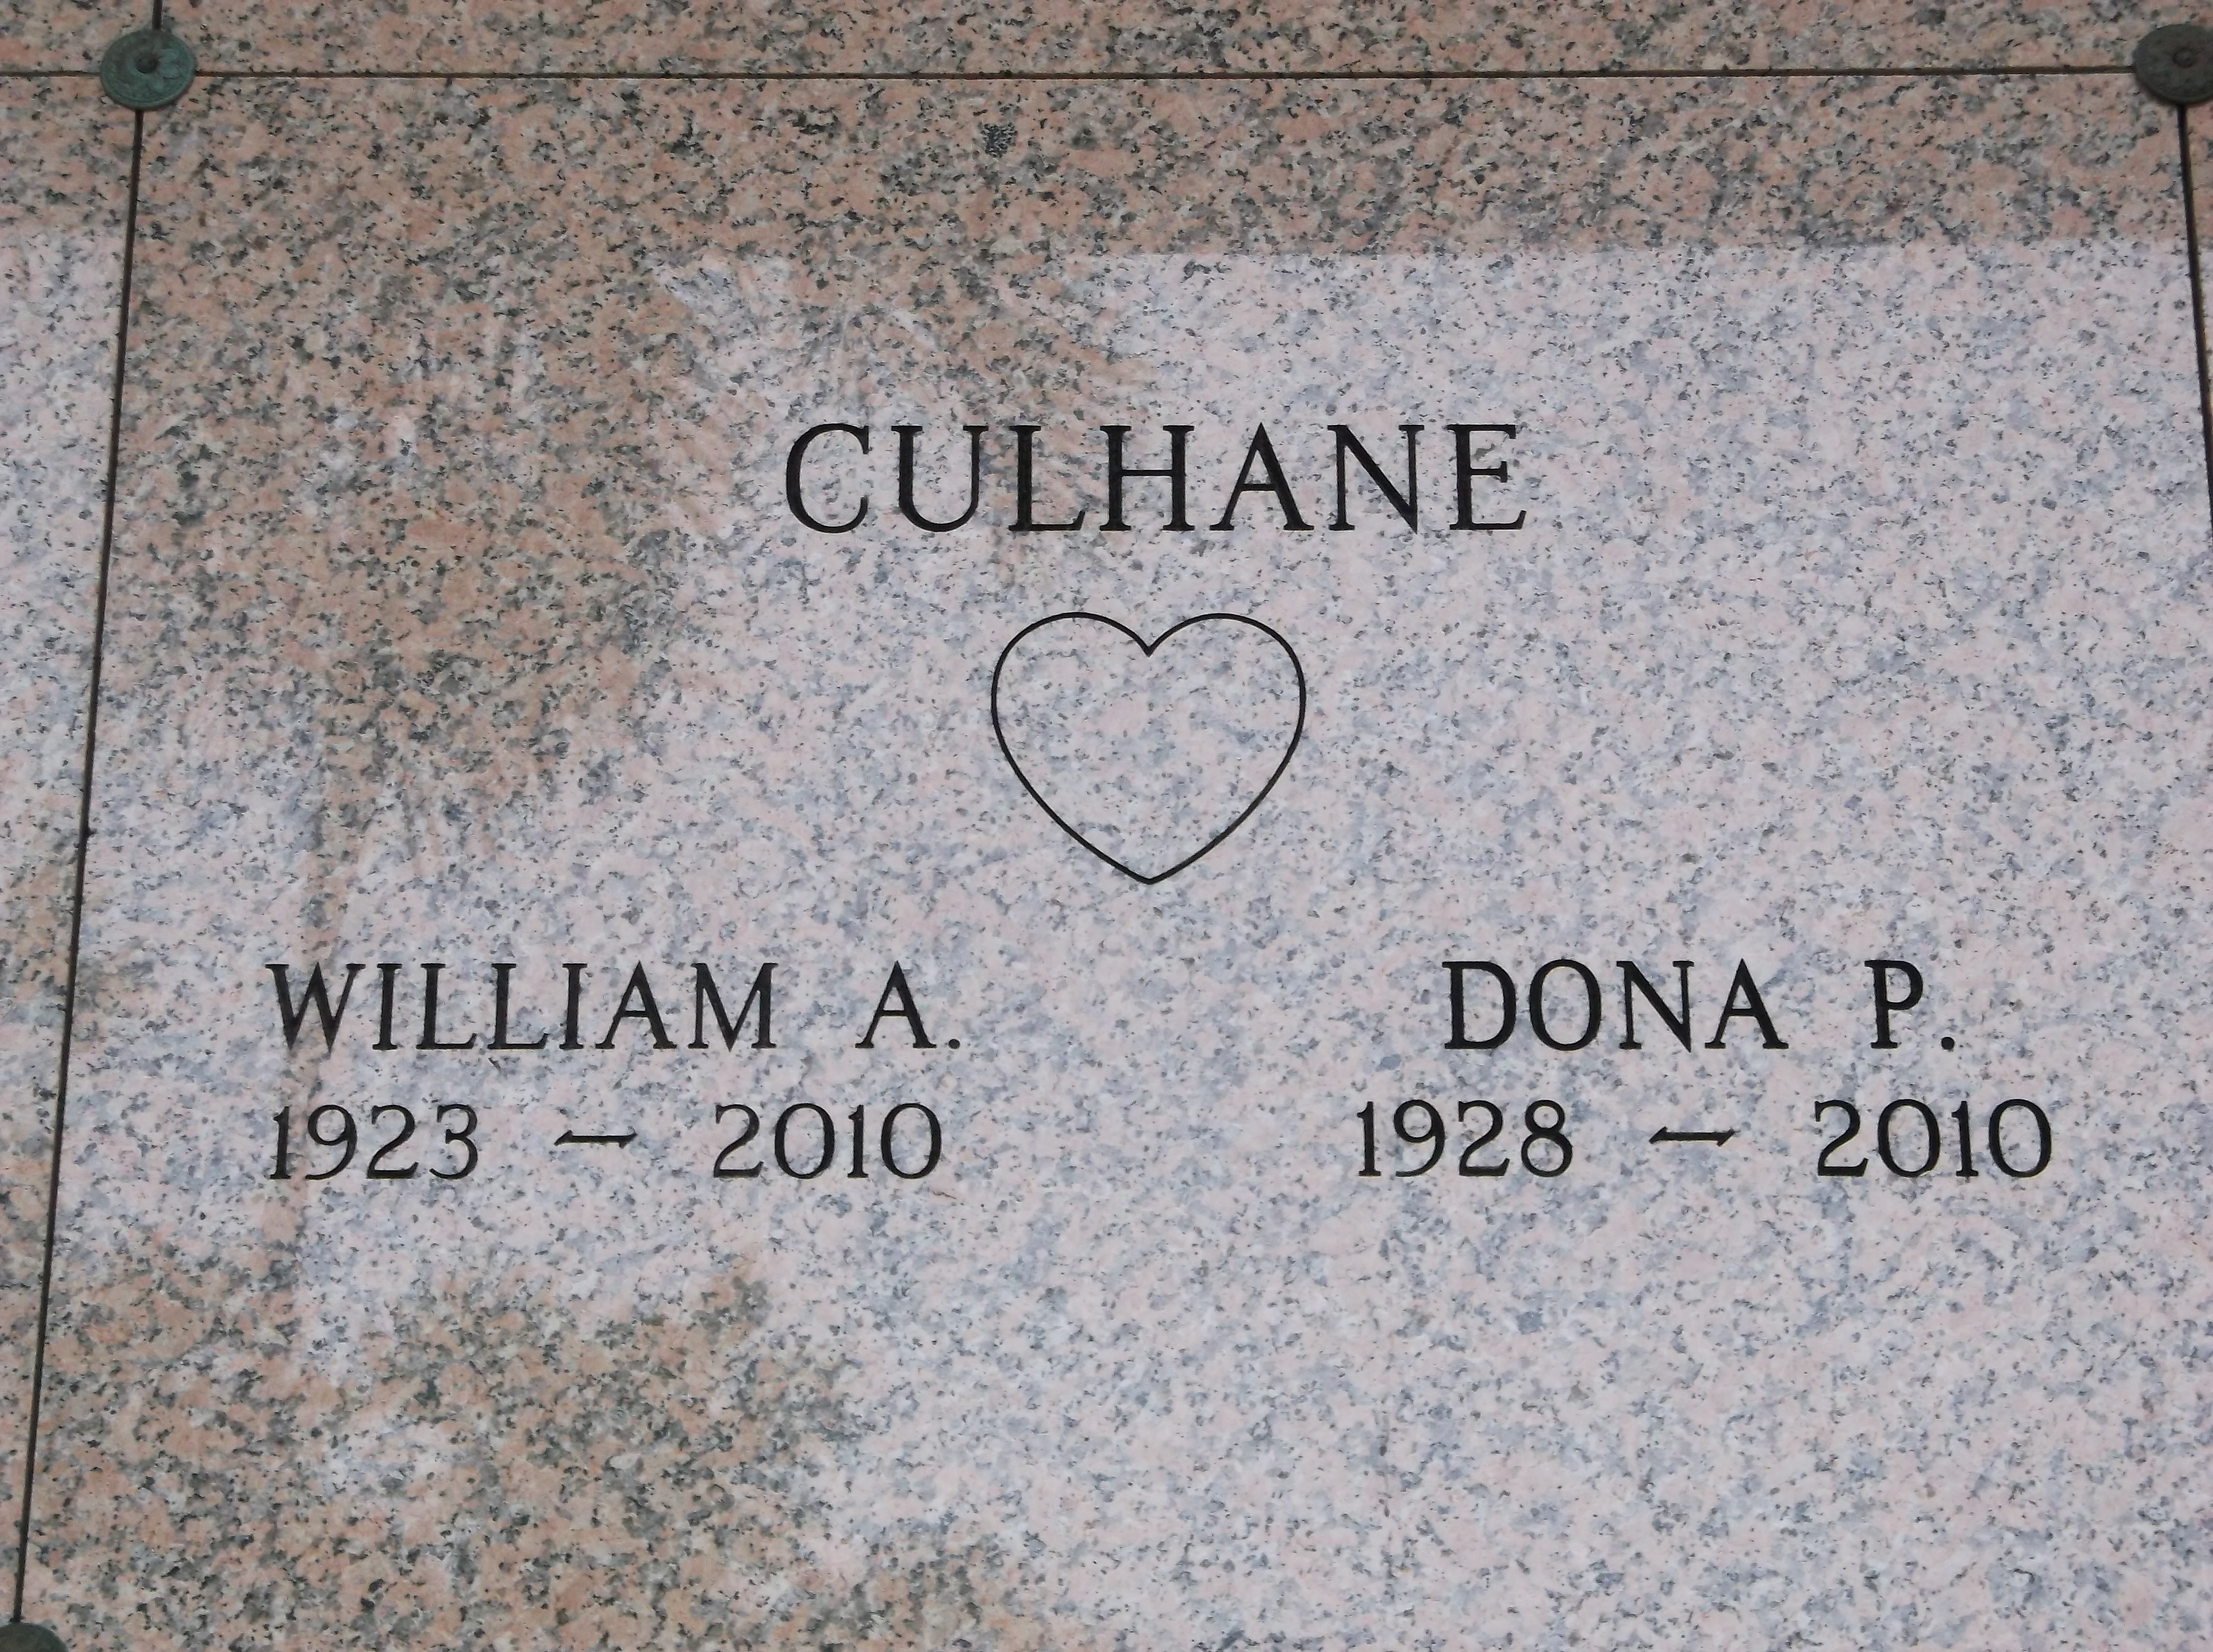 William A Culhane